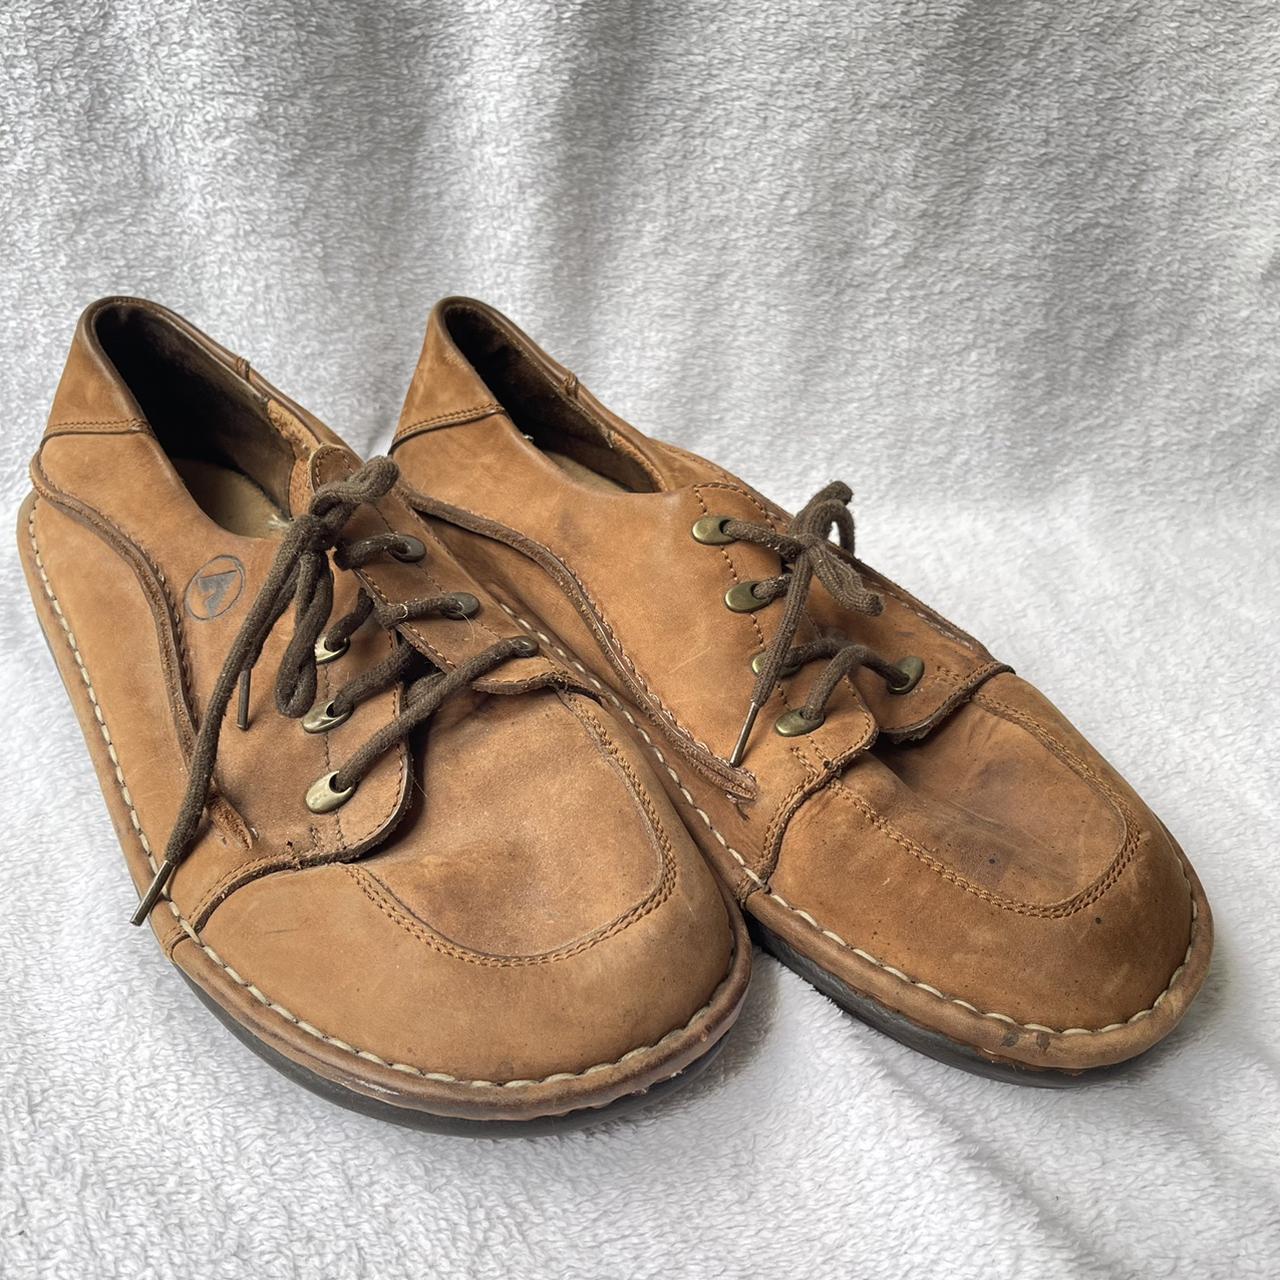 Killer 90’s Airwalk Moc Toe Shoes | Some Wear and... - Depop